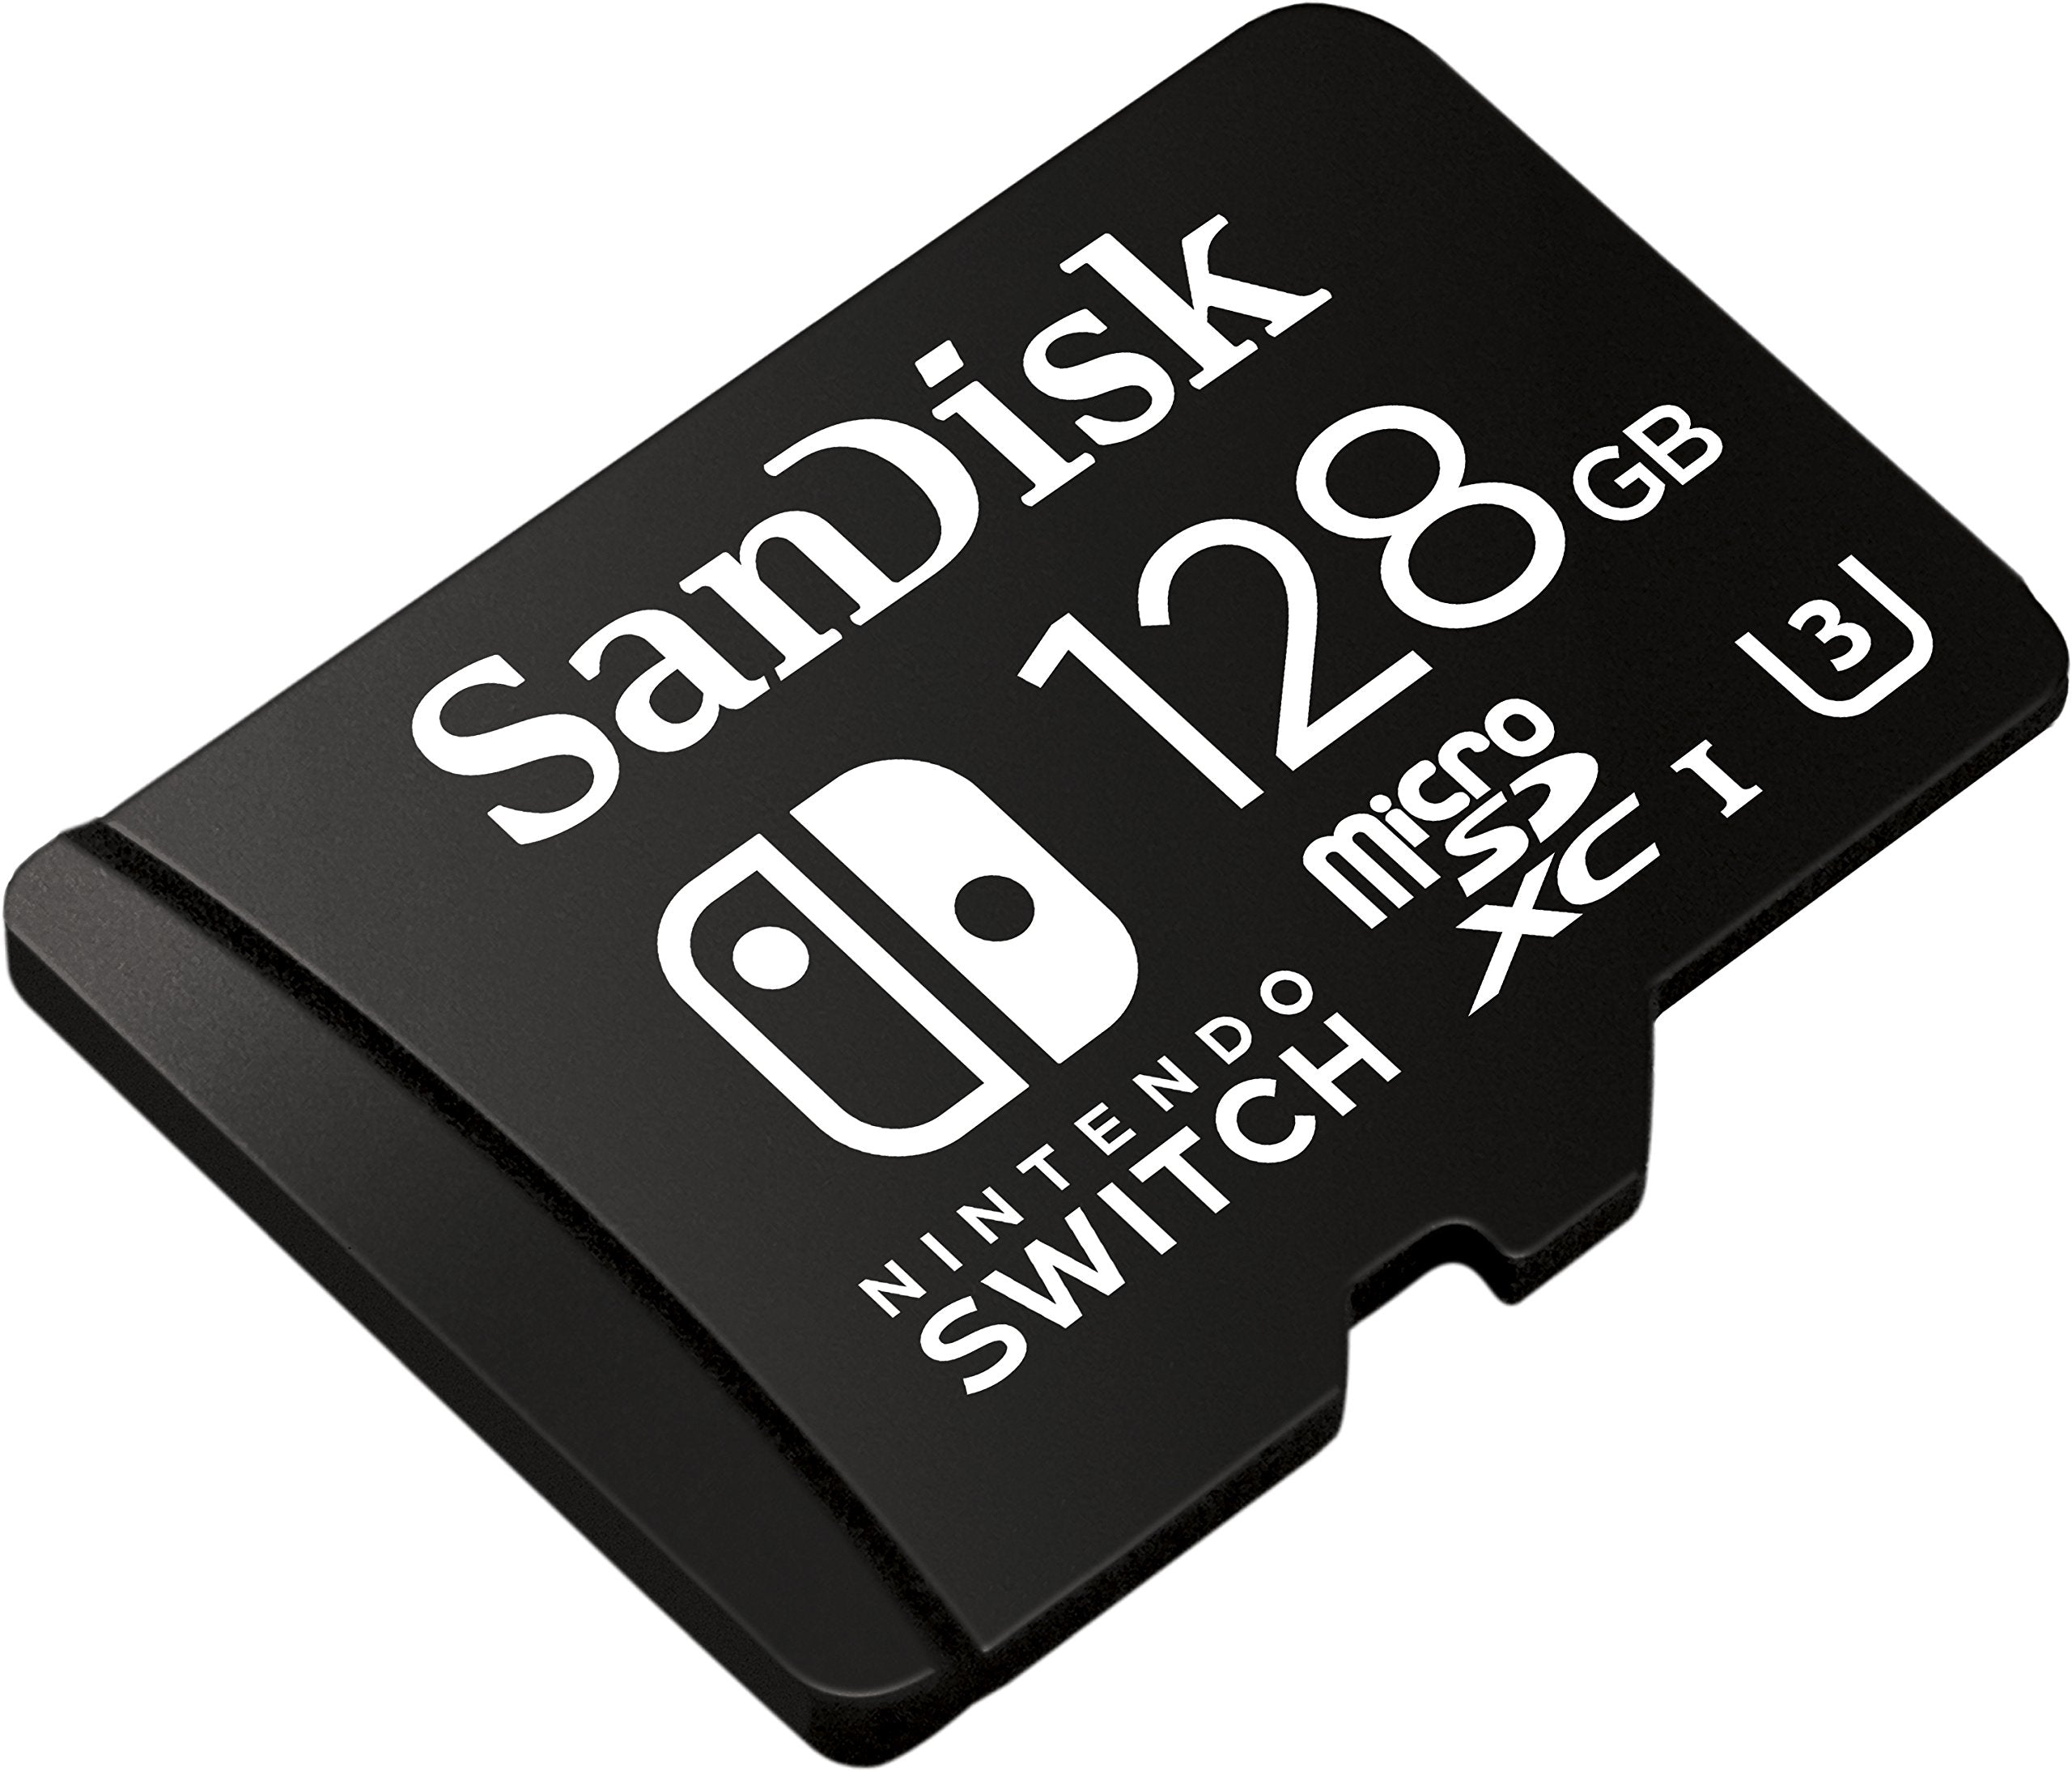 SanDisk 128GB microSDXC UHS-I card for Nintendo Switch - SDSQXAO-128G-GN6ZA